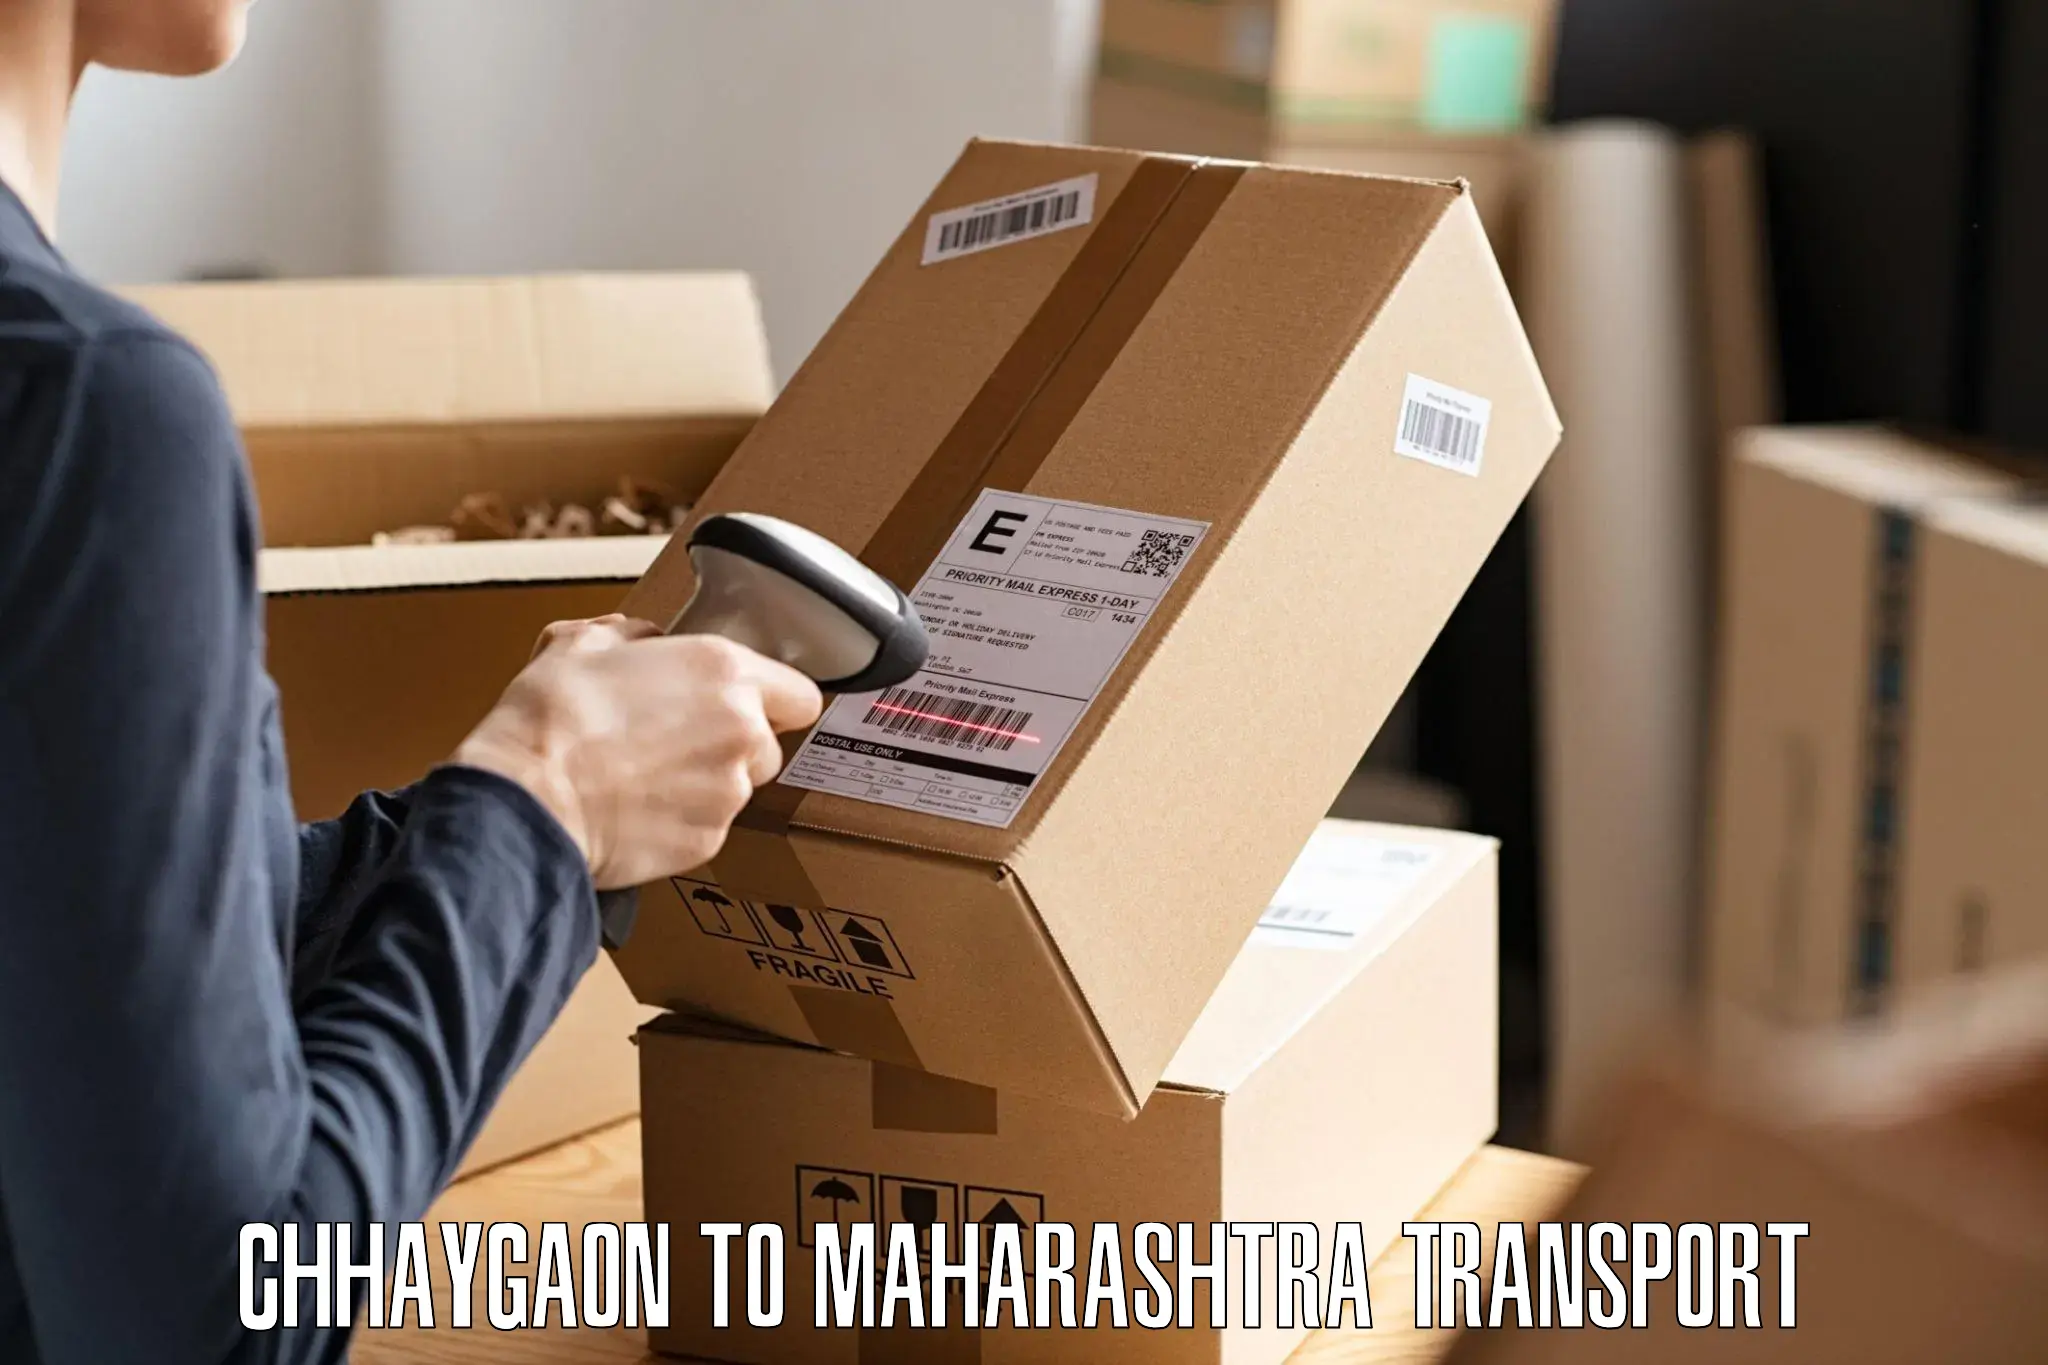 Truck transport companies in India Chhaygaon to Satara